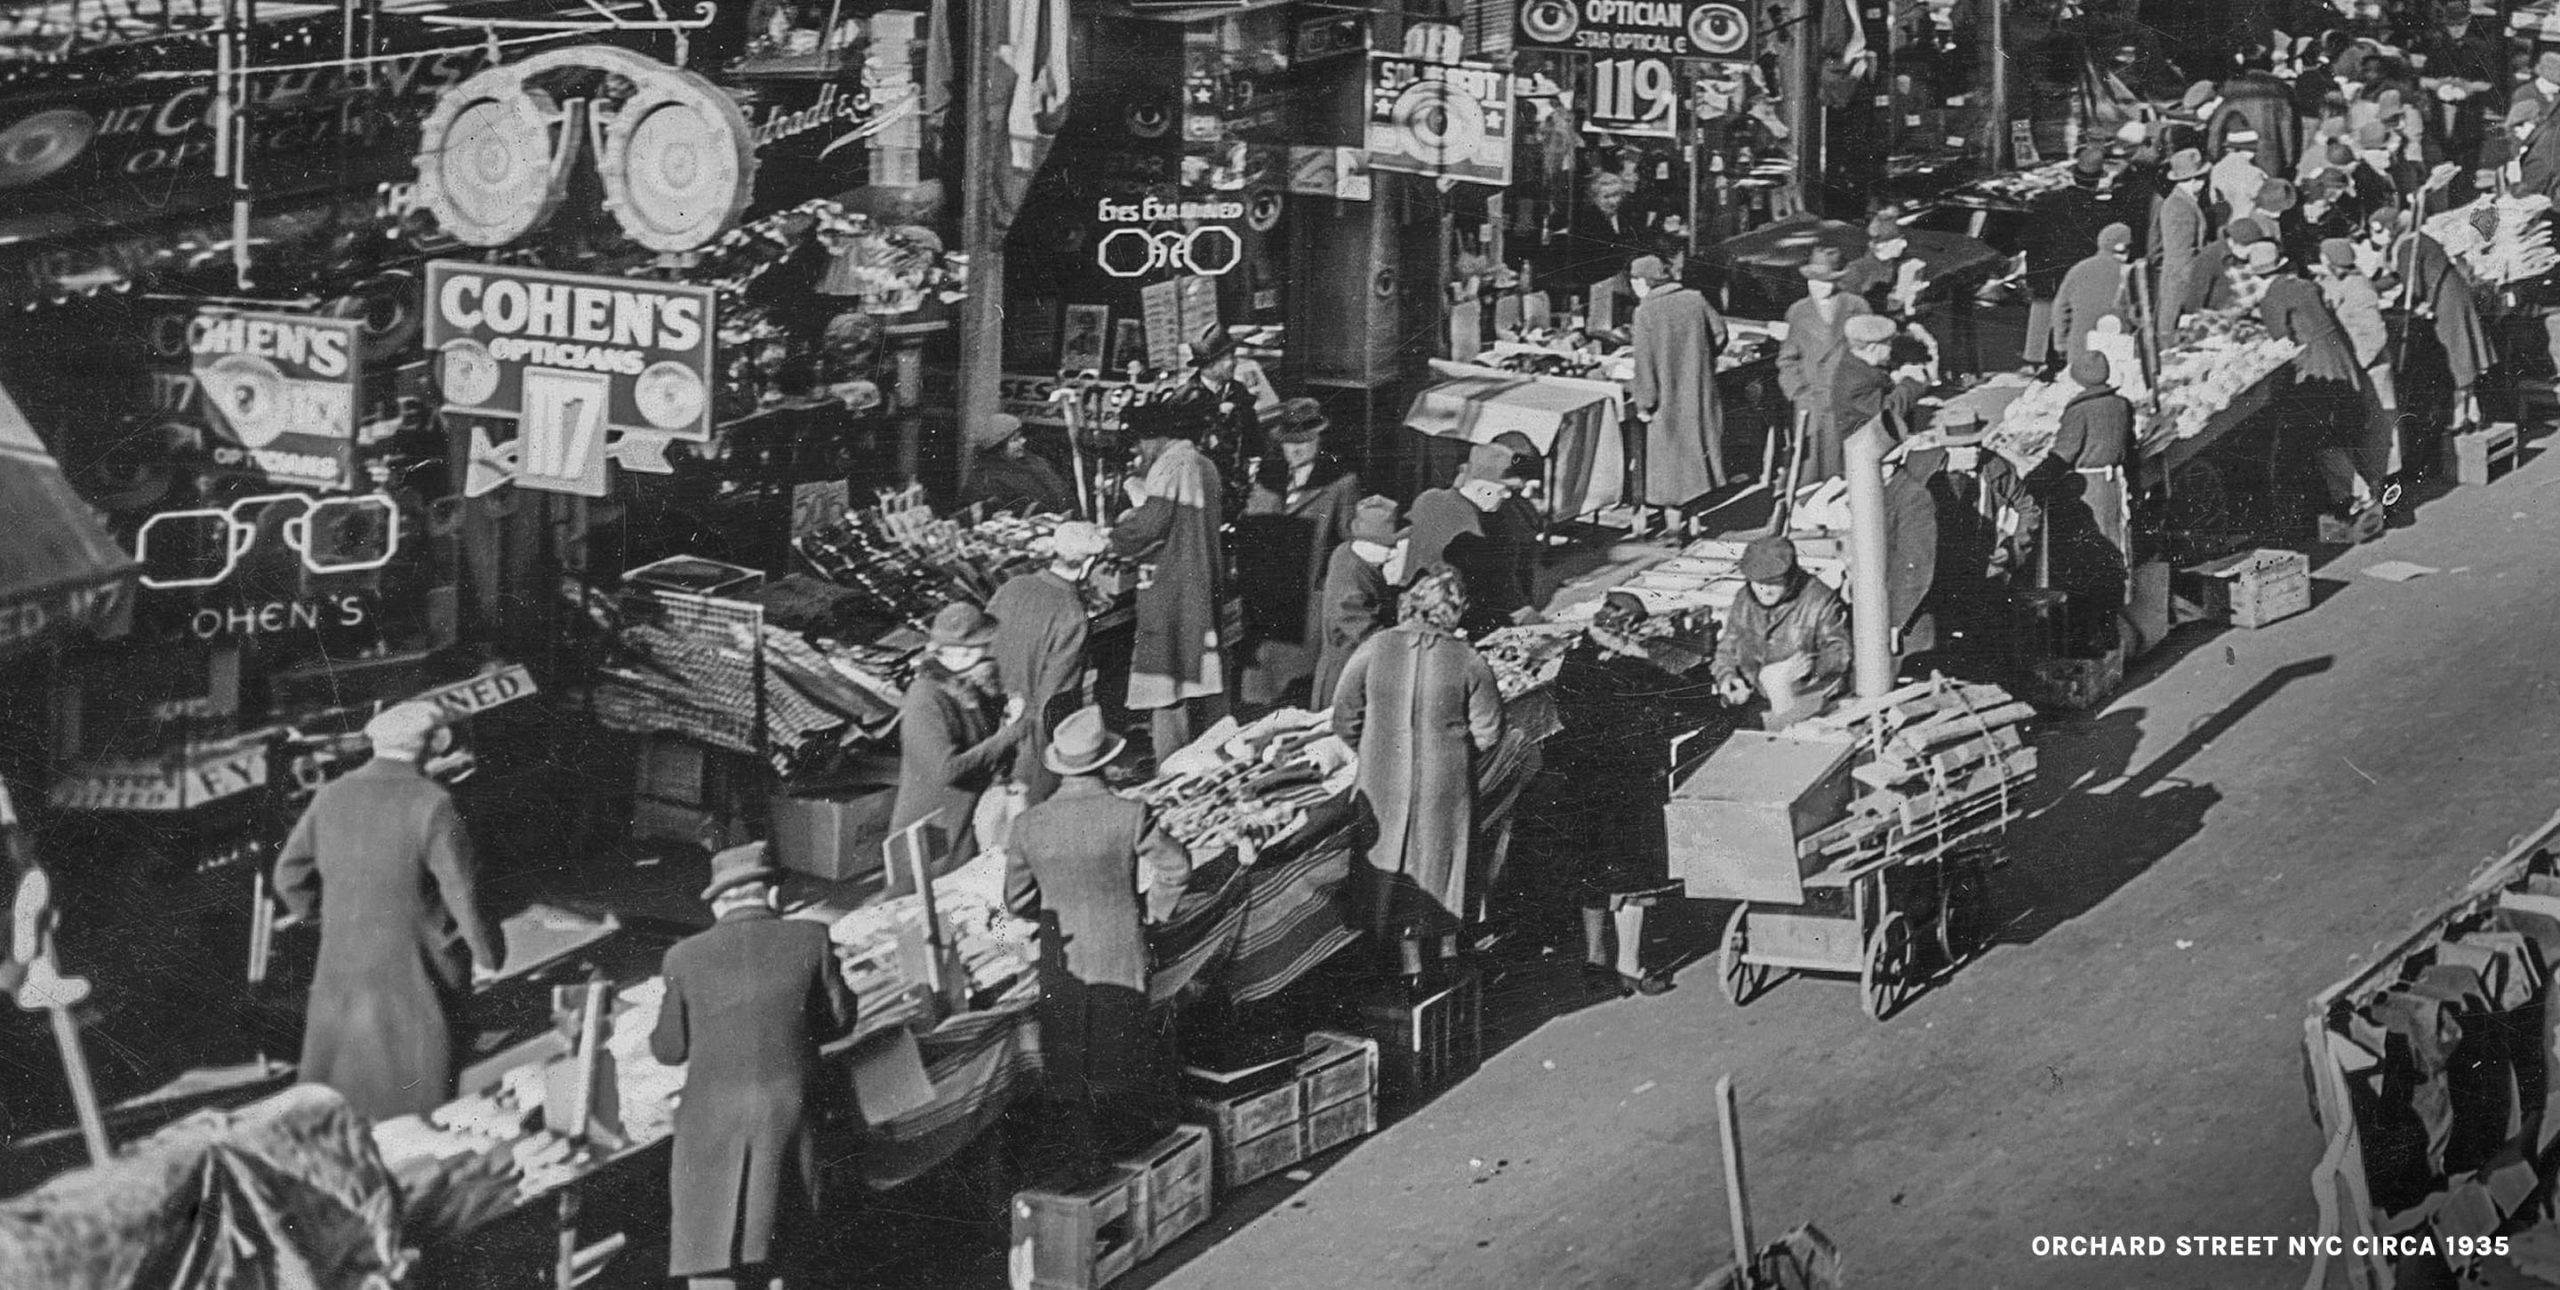 Cohen's Fashion Optical on Orchard Street, NYC, circa 1935